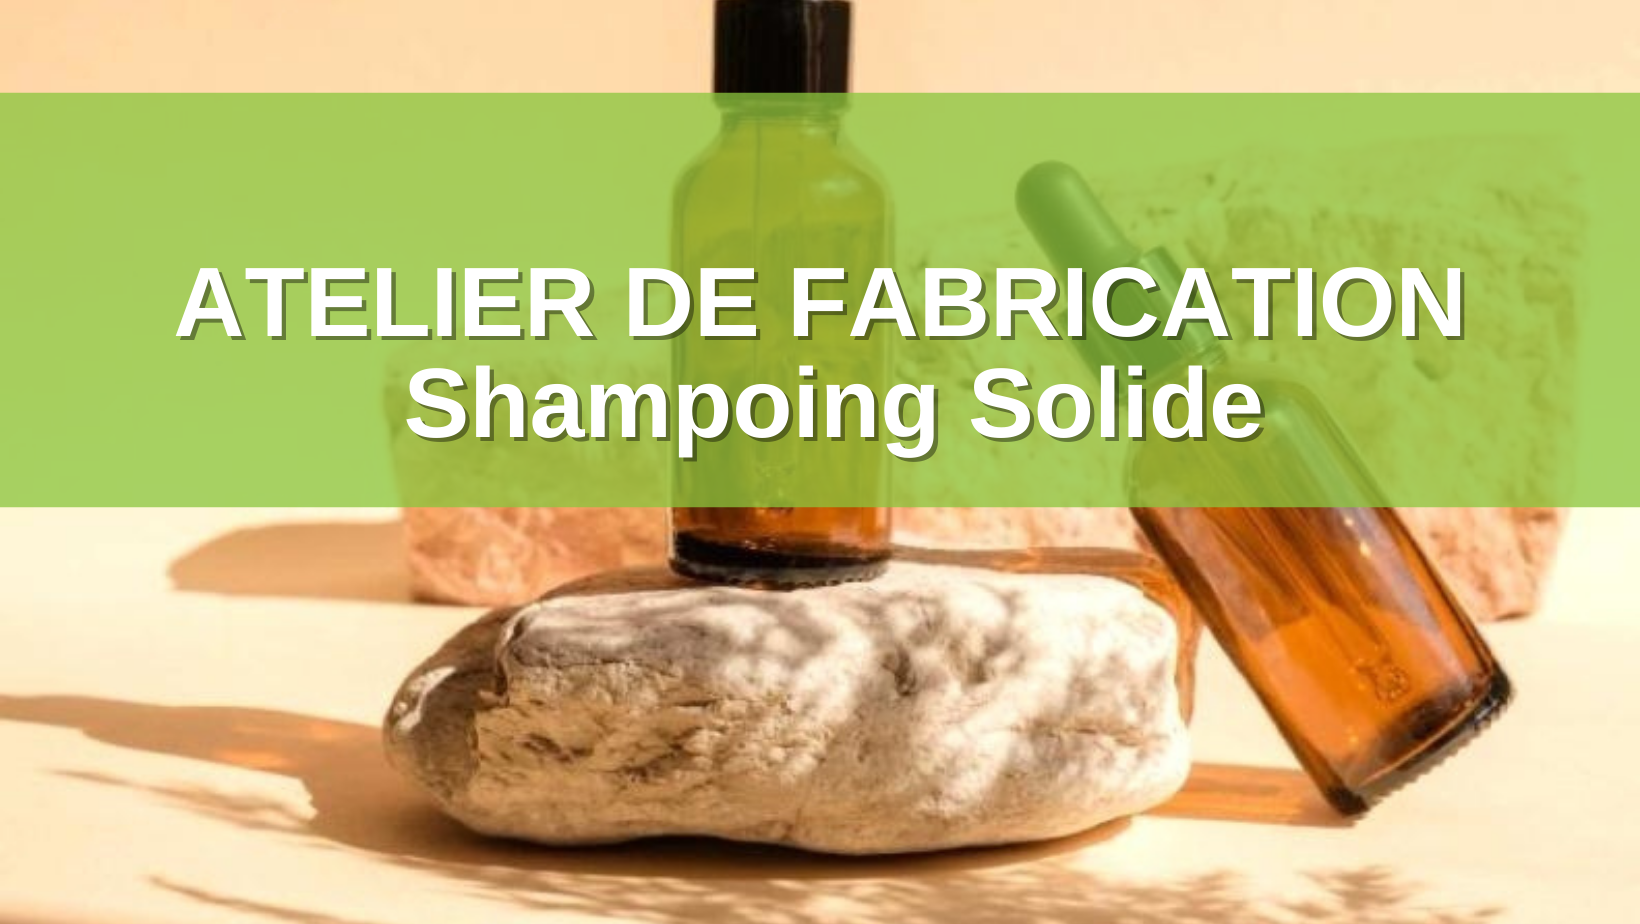 Atelier de fabrication - Le shampoing solide